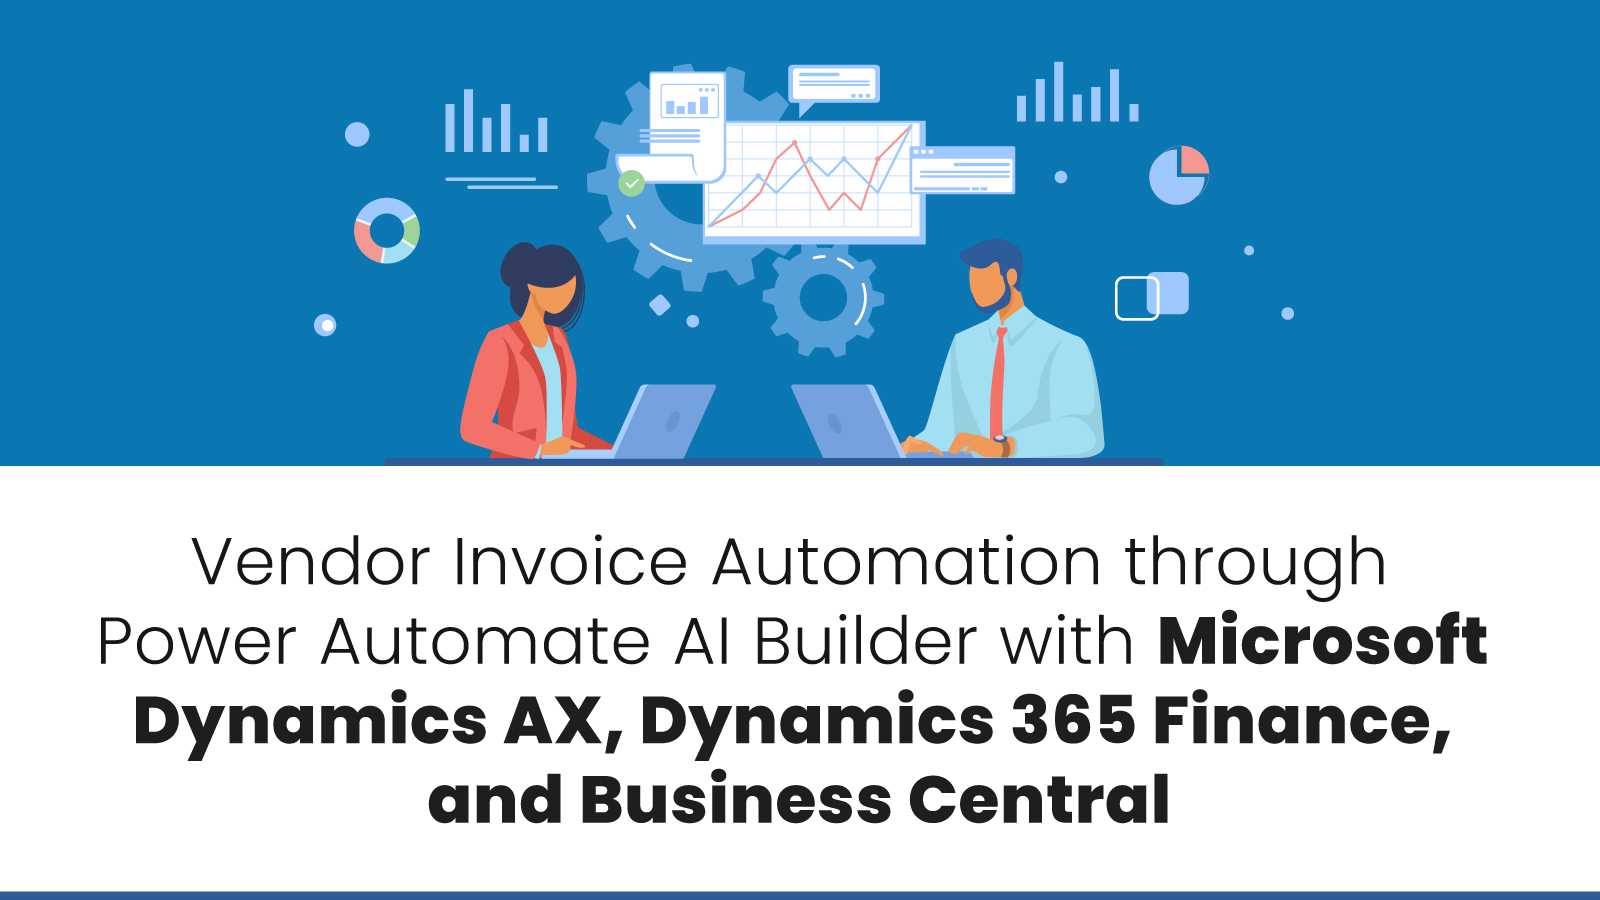 Vendor Invoice Automation through Power Automate AI Builder with Microsoft Dynamics